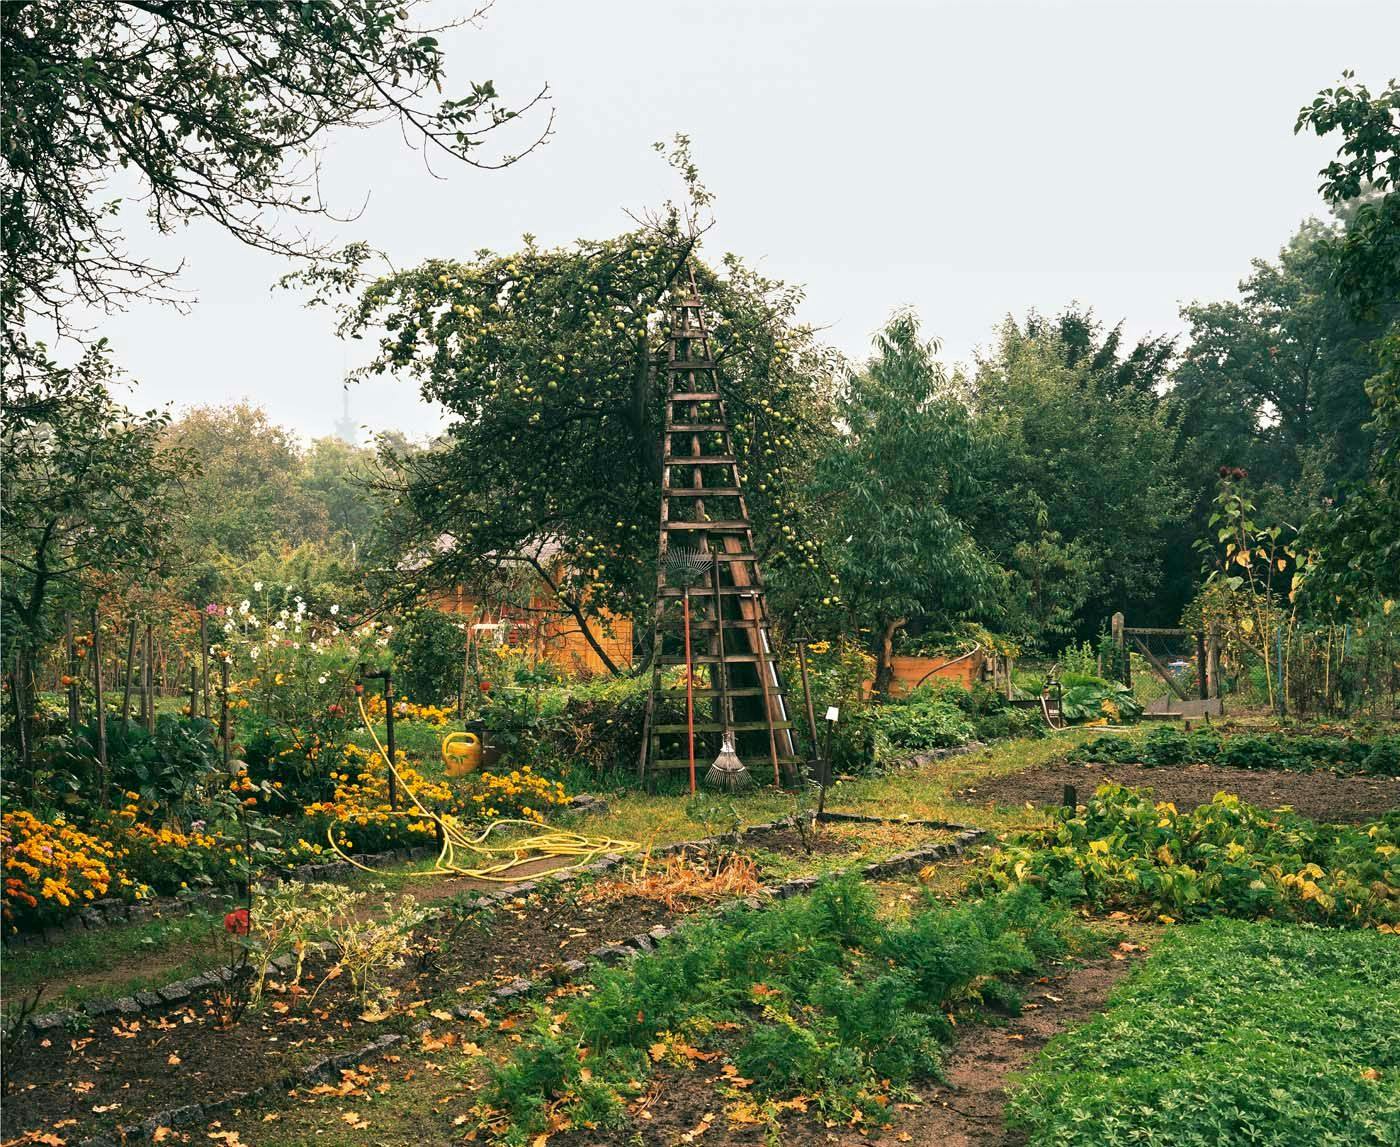 A photograph by Stan Douglas, titled Garden Designed by Lenne, Halbinsel Meederhorn, Sacrow, dated 1994.